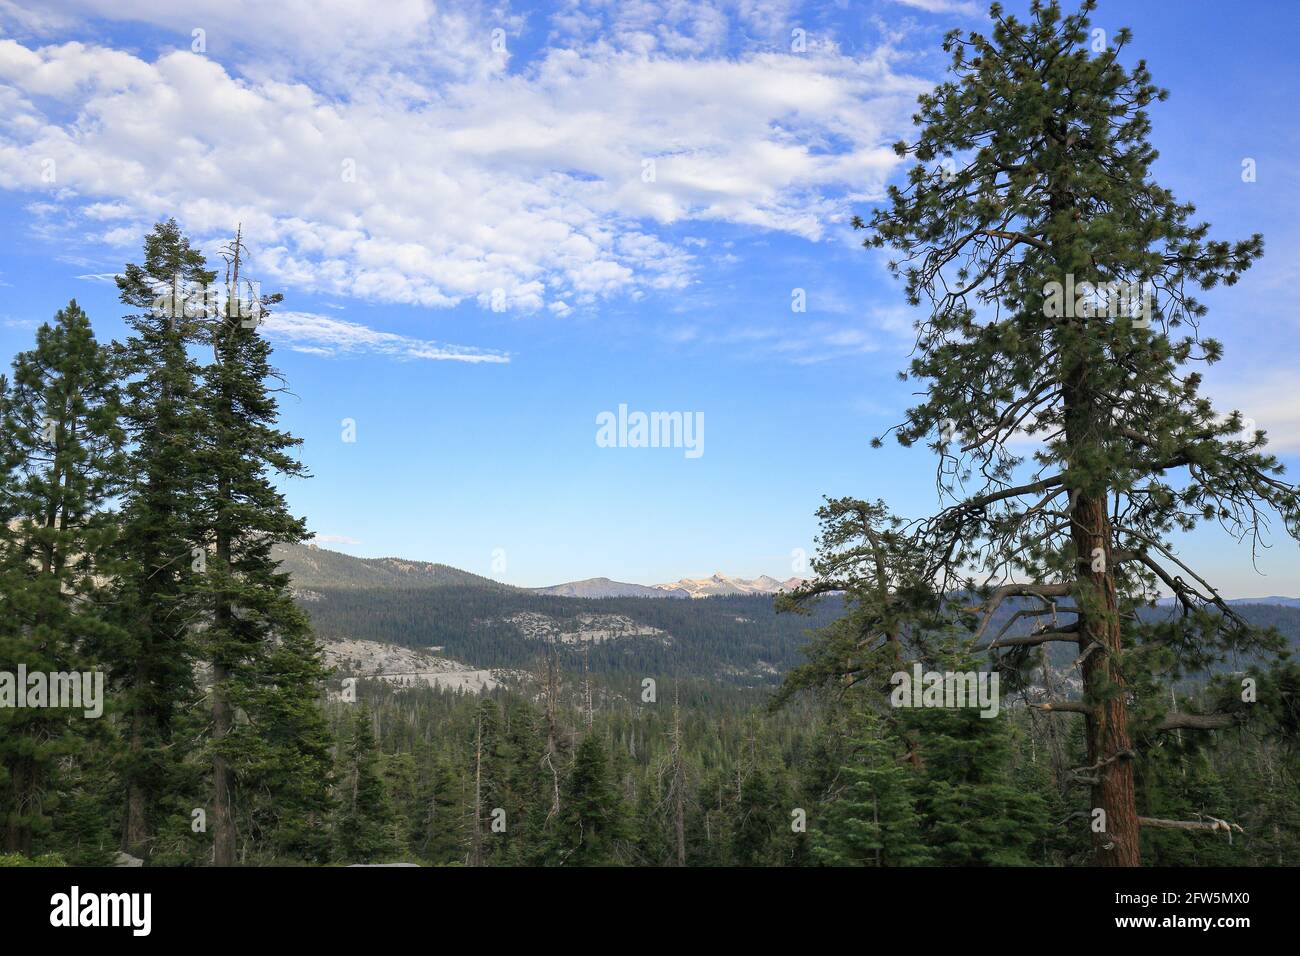 On the way to Yosemite national park near half dome, California USA Stock Photo